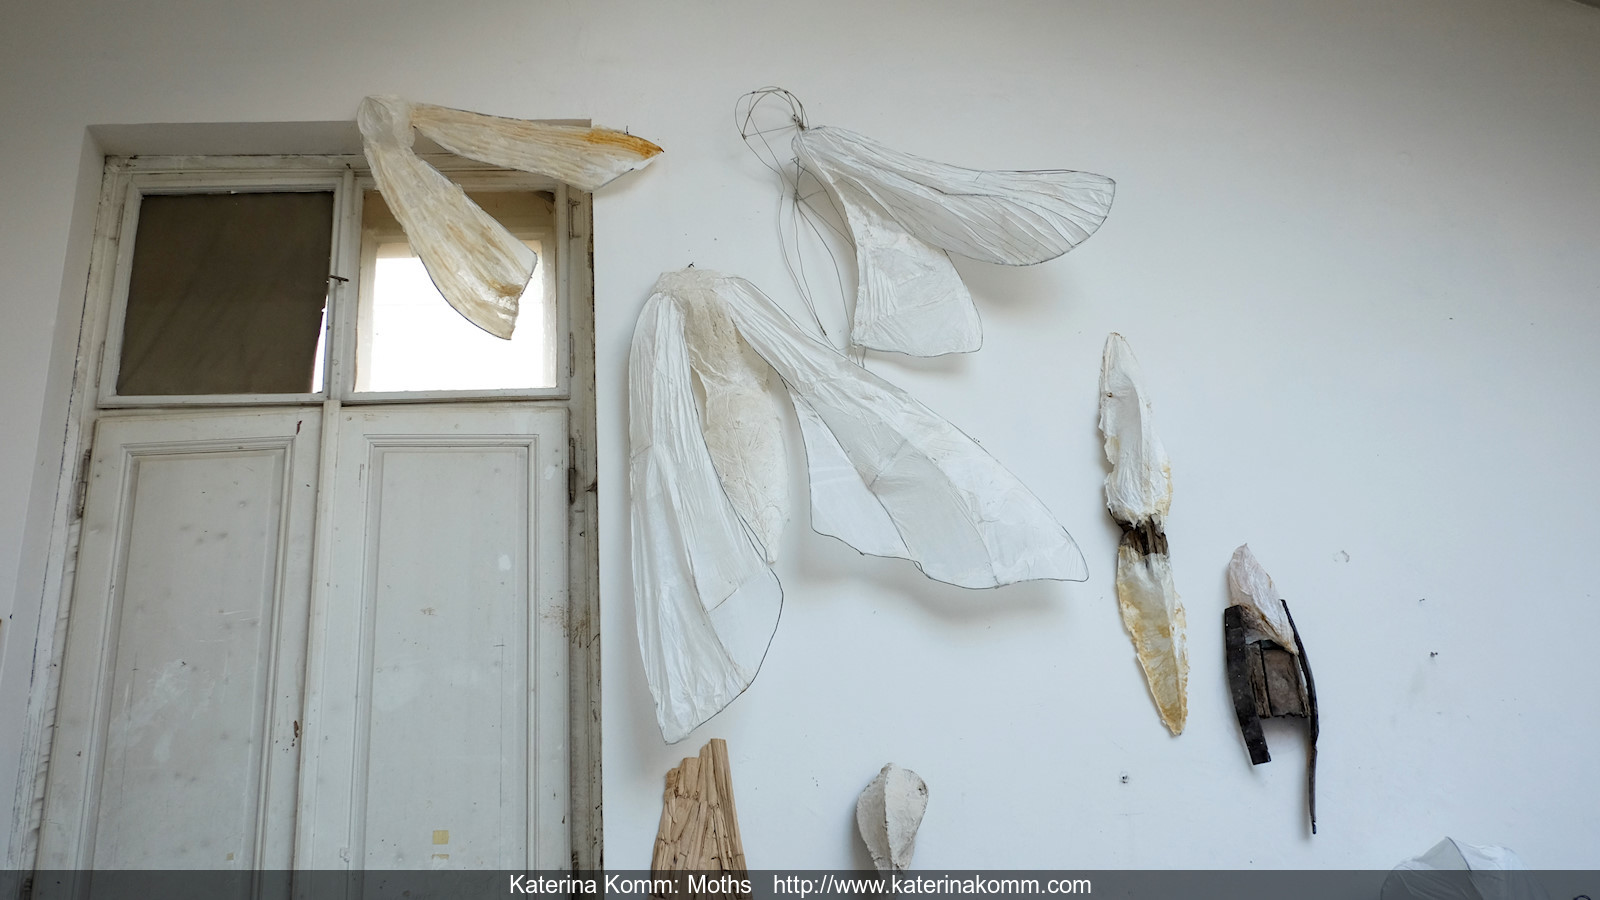 Katerina Komm, sculpture, WORKS: Moths